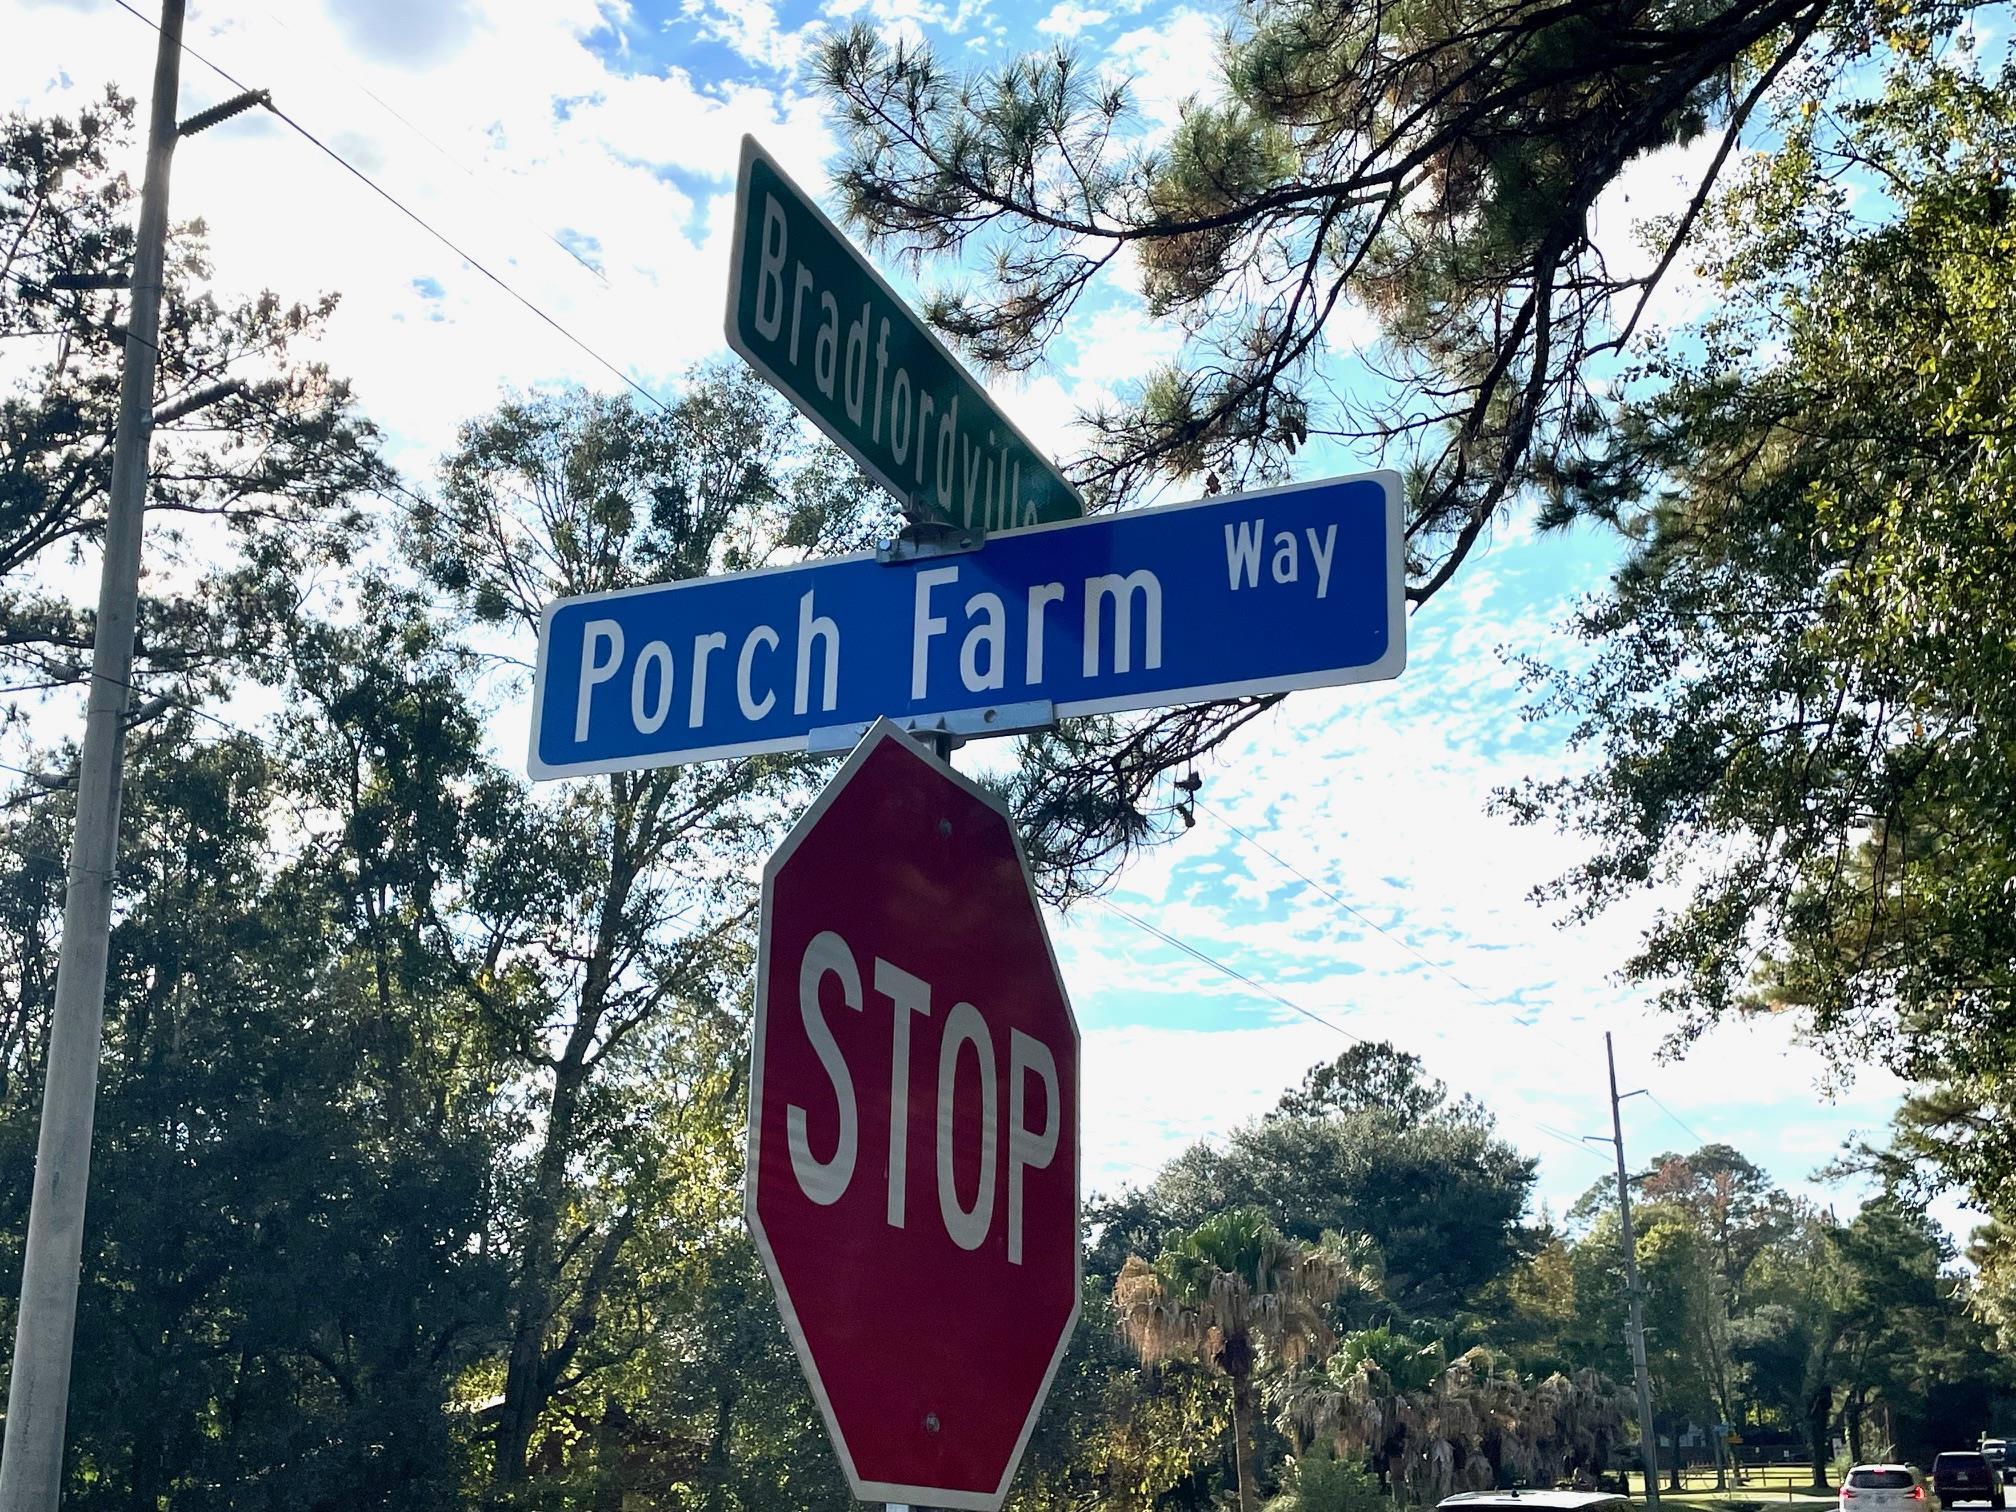 Lot 5 Porch Farm,TALLAHASSEE,Florida 32309-6408,Lots and land,Porch Farm,367678